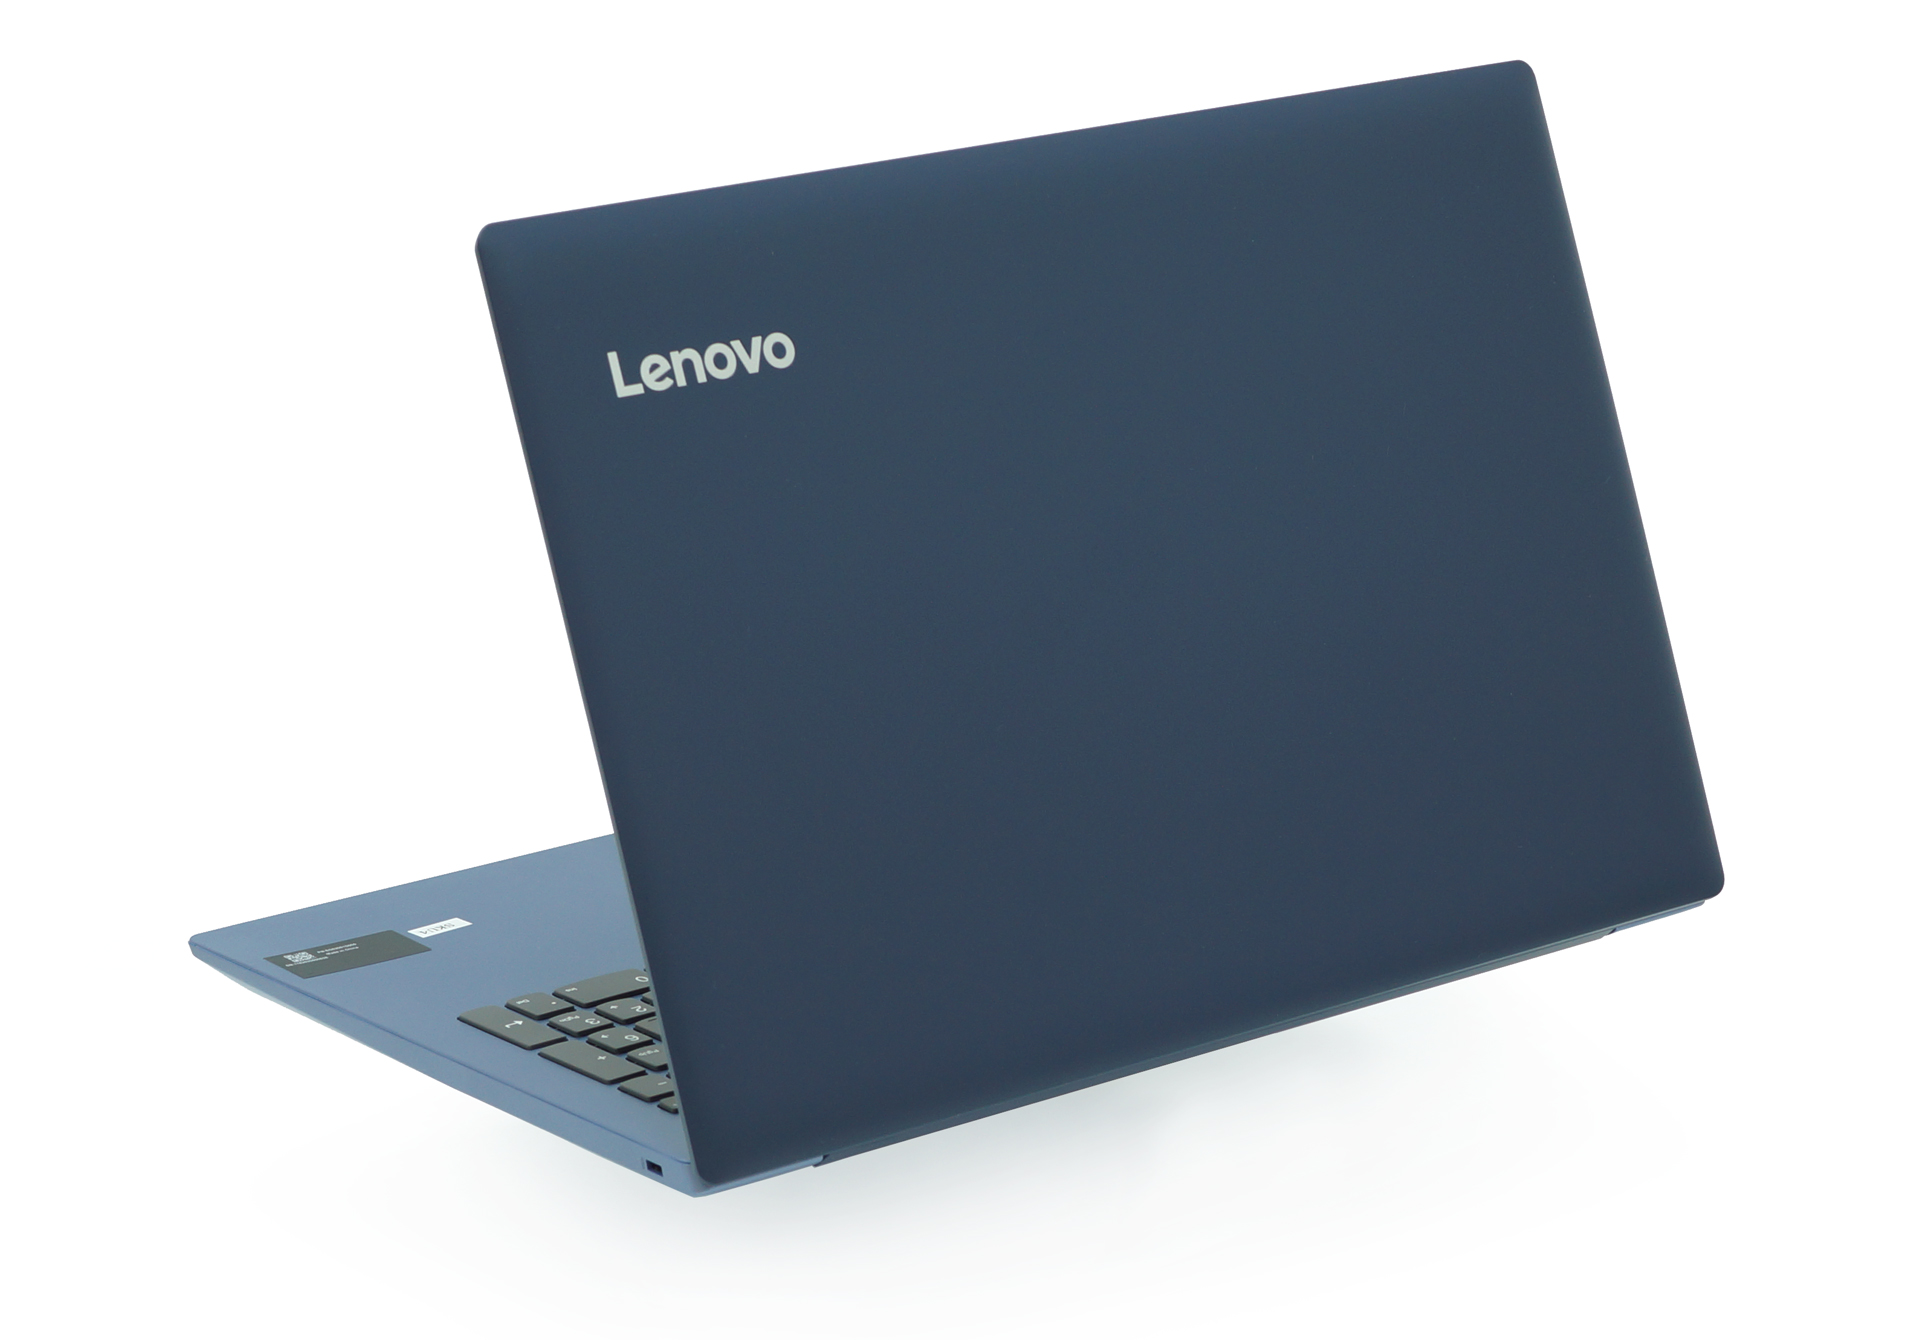 Lenovo IdeaPad 330-15ICH - gaming device for the average user | España